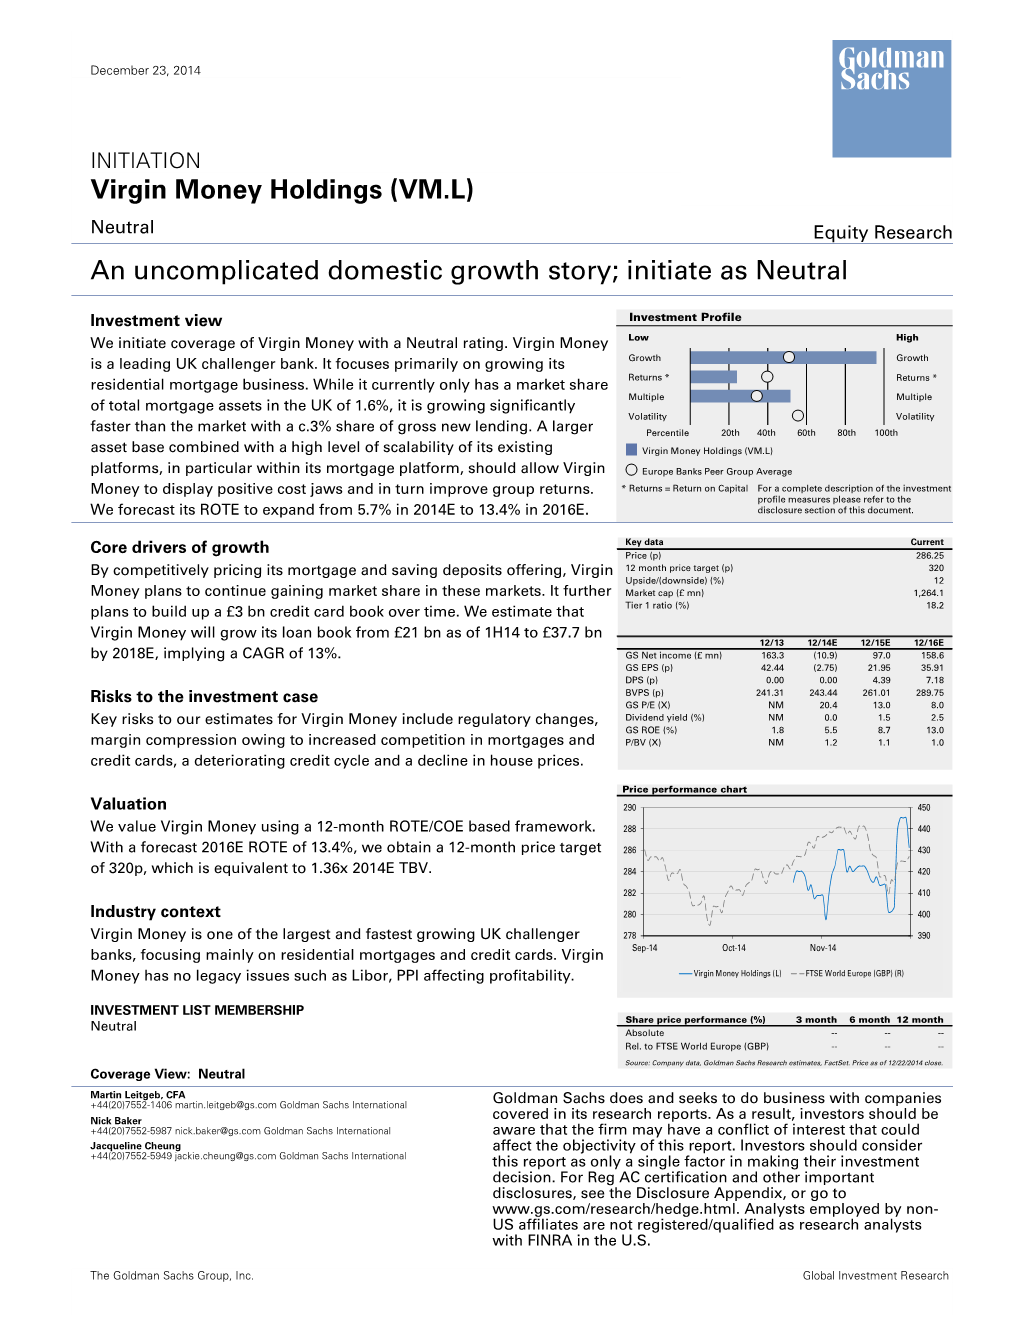 Virgin Money Holdings (VM.L)